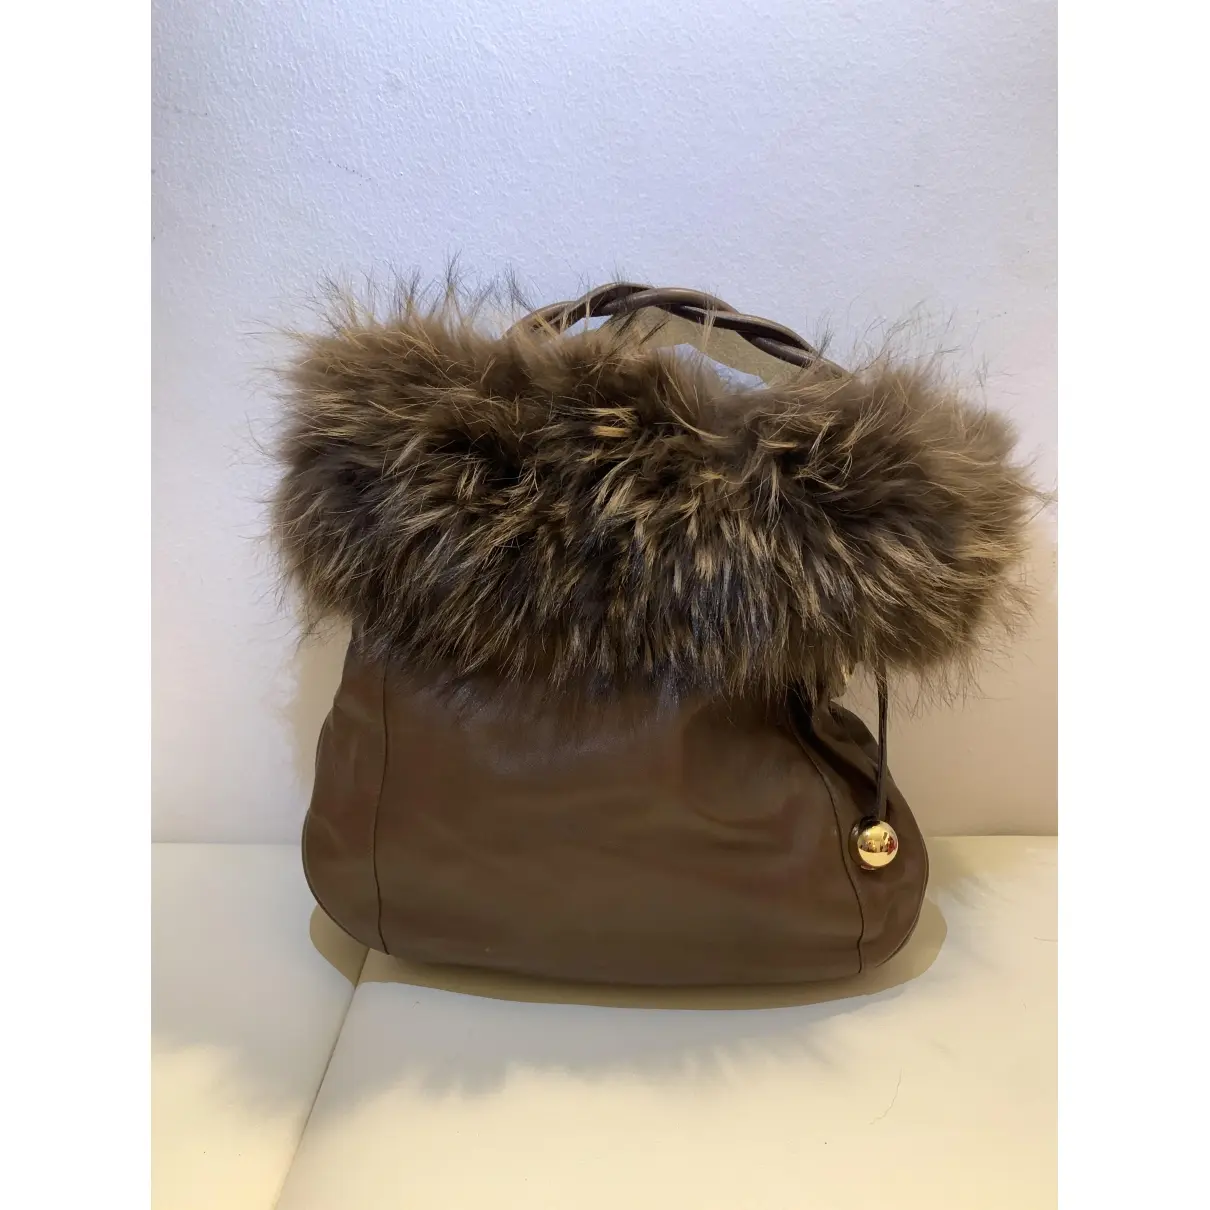 Leather handbag Furla